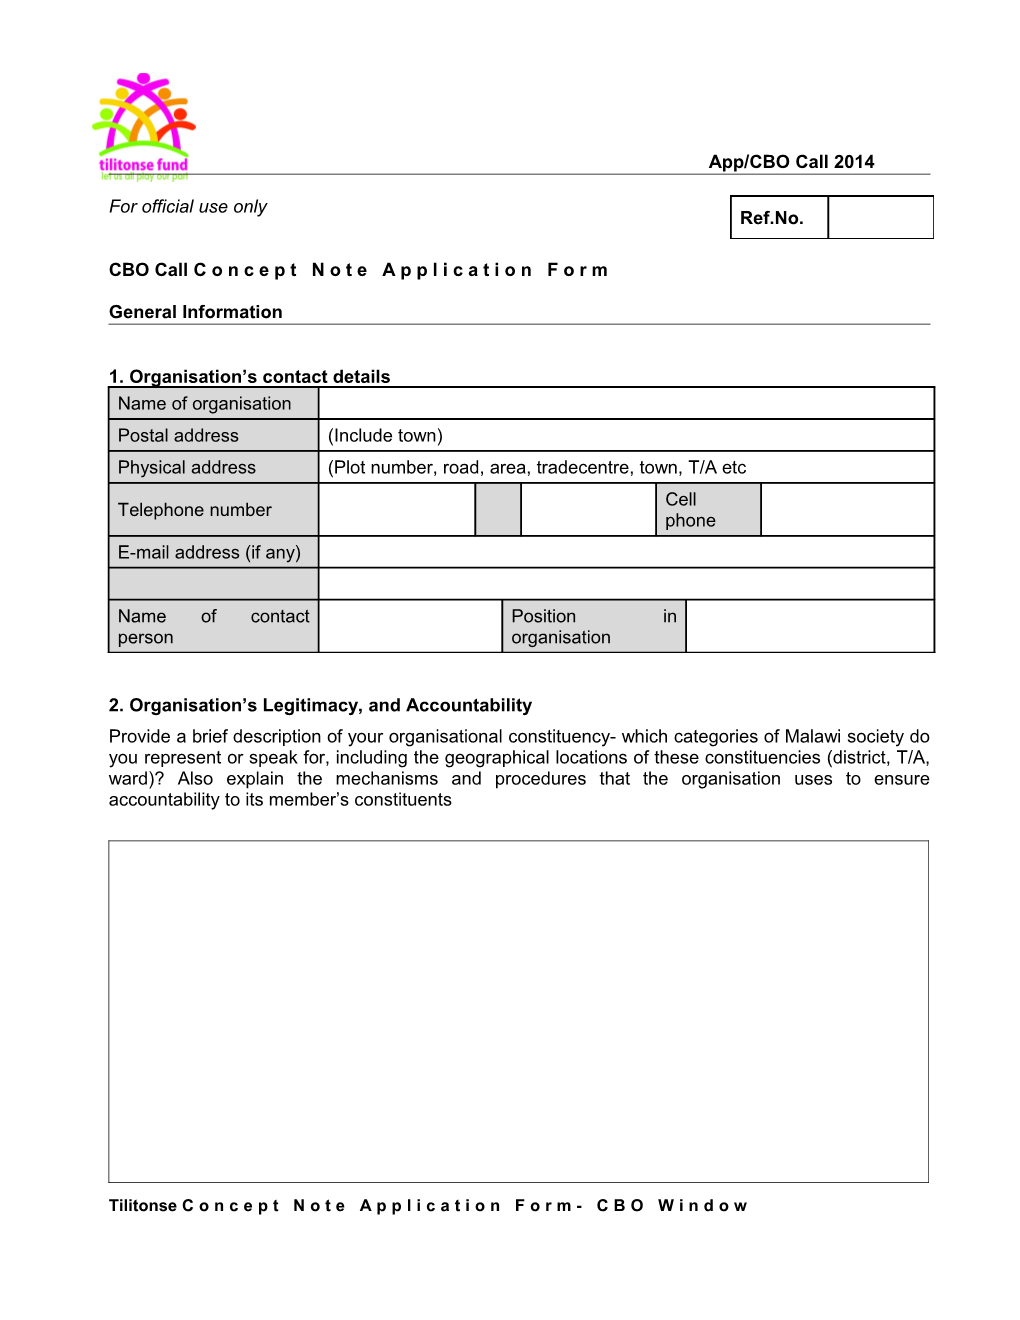 CBO Callconcept Note Application Form